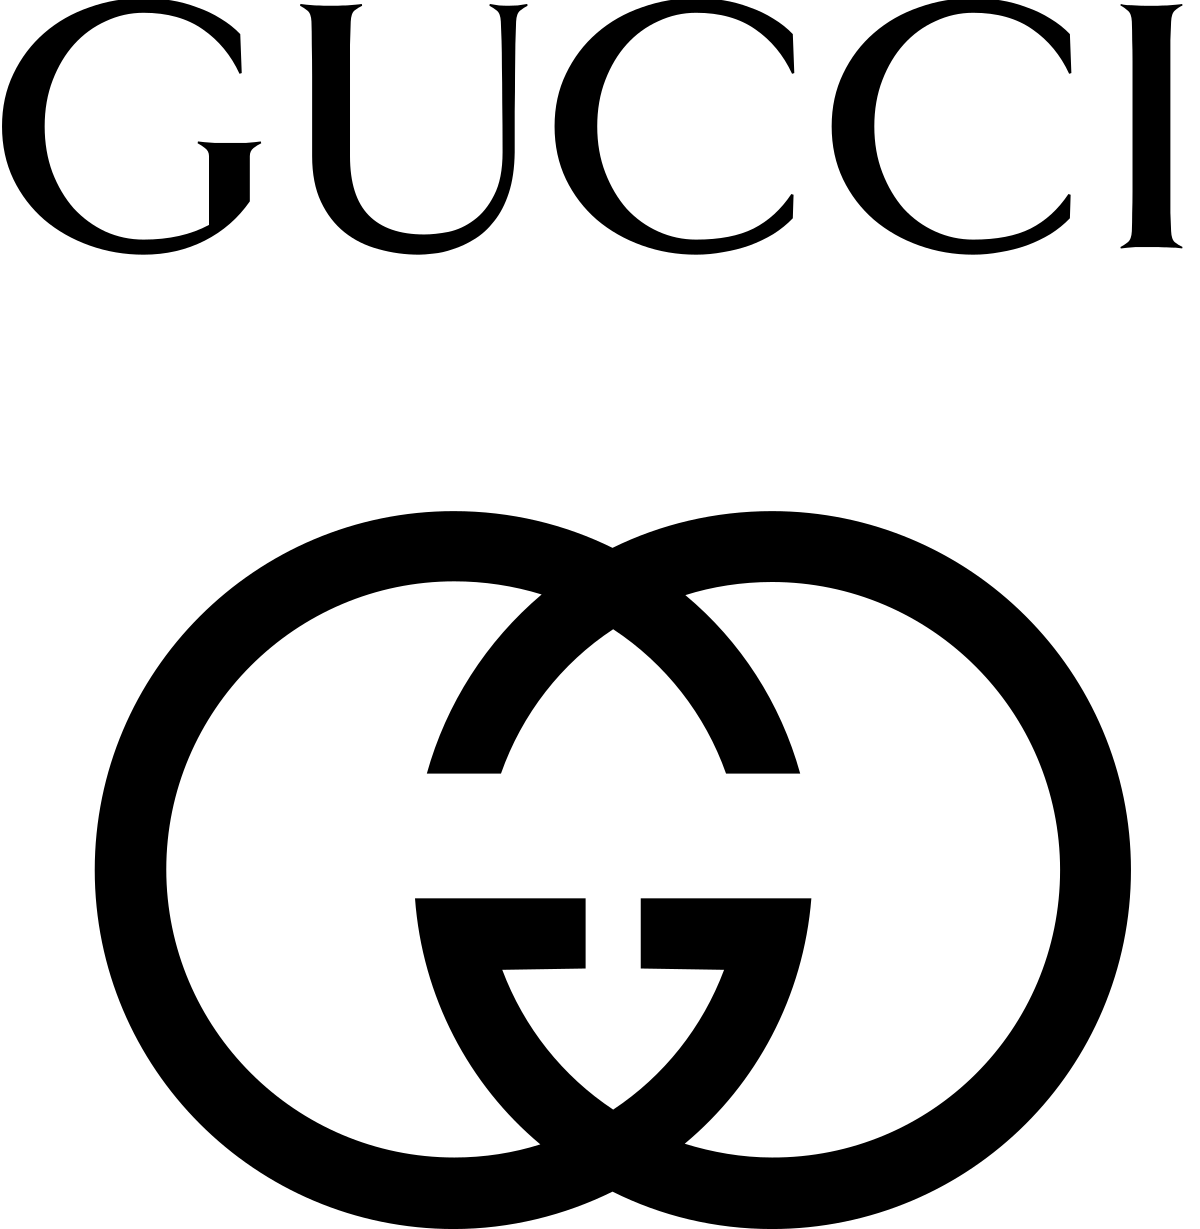 Gucci logo PNG Image Transparente image